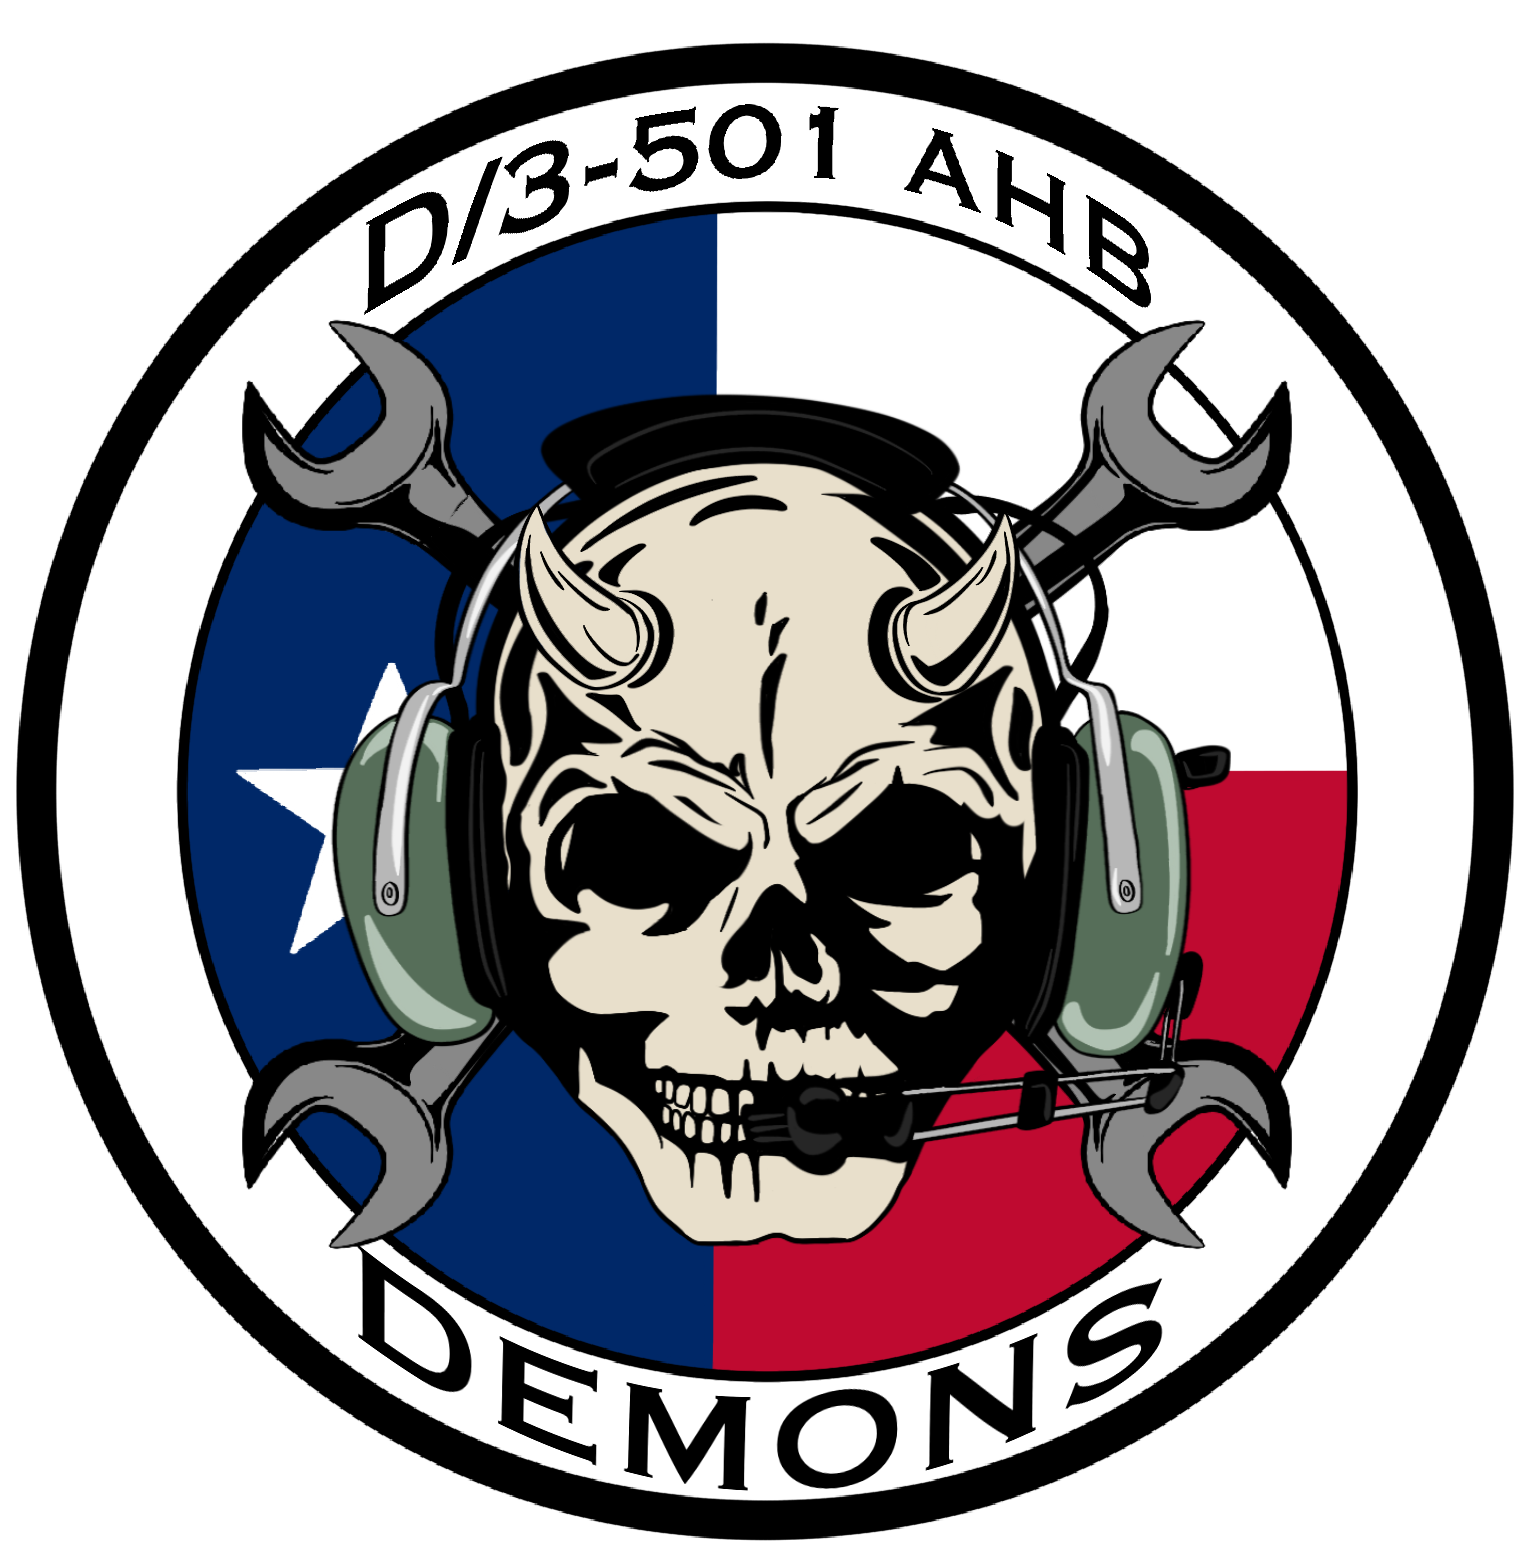 D Co, 3-501 AHB "Demons"